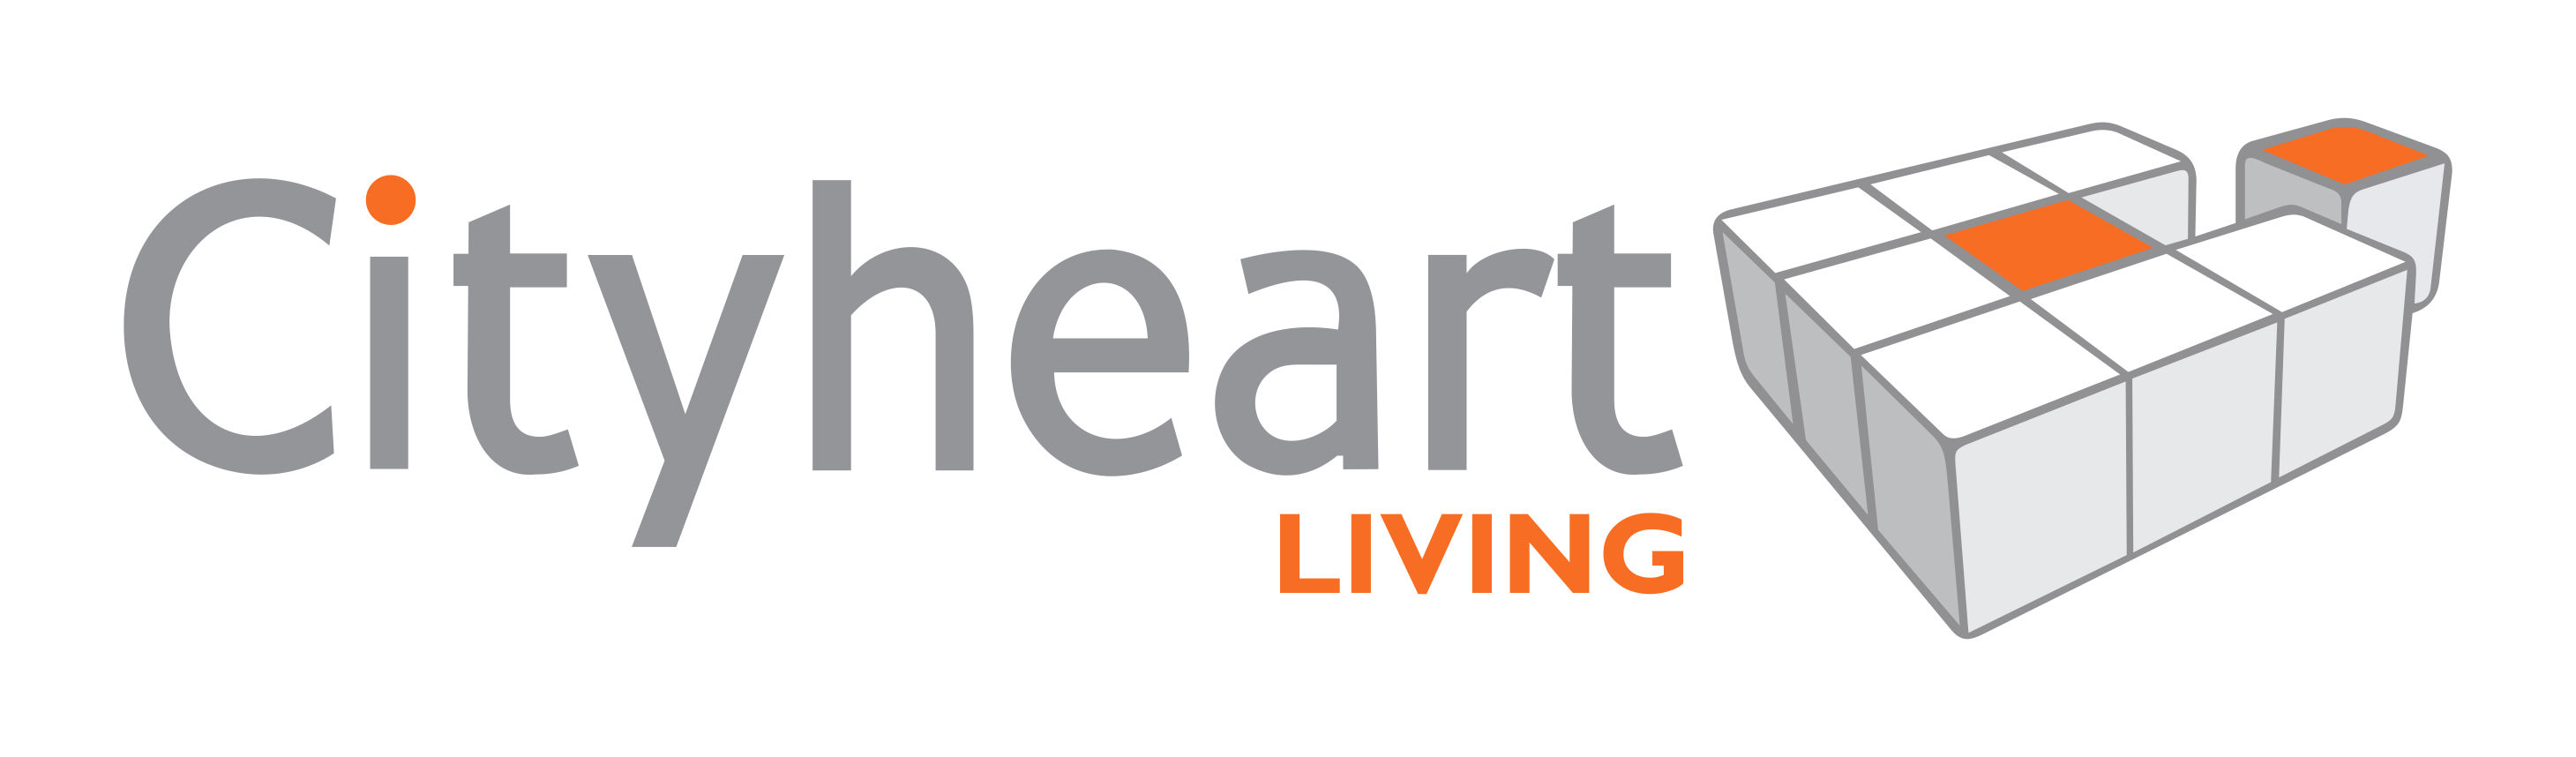 Cityheart Living Logo